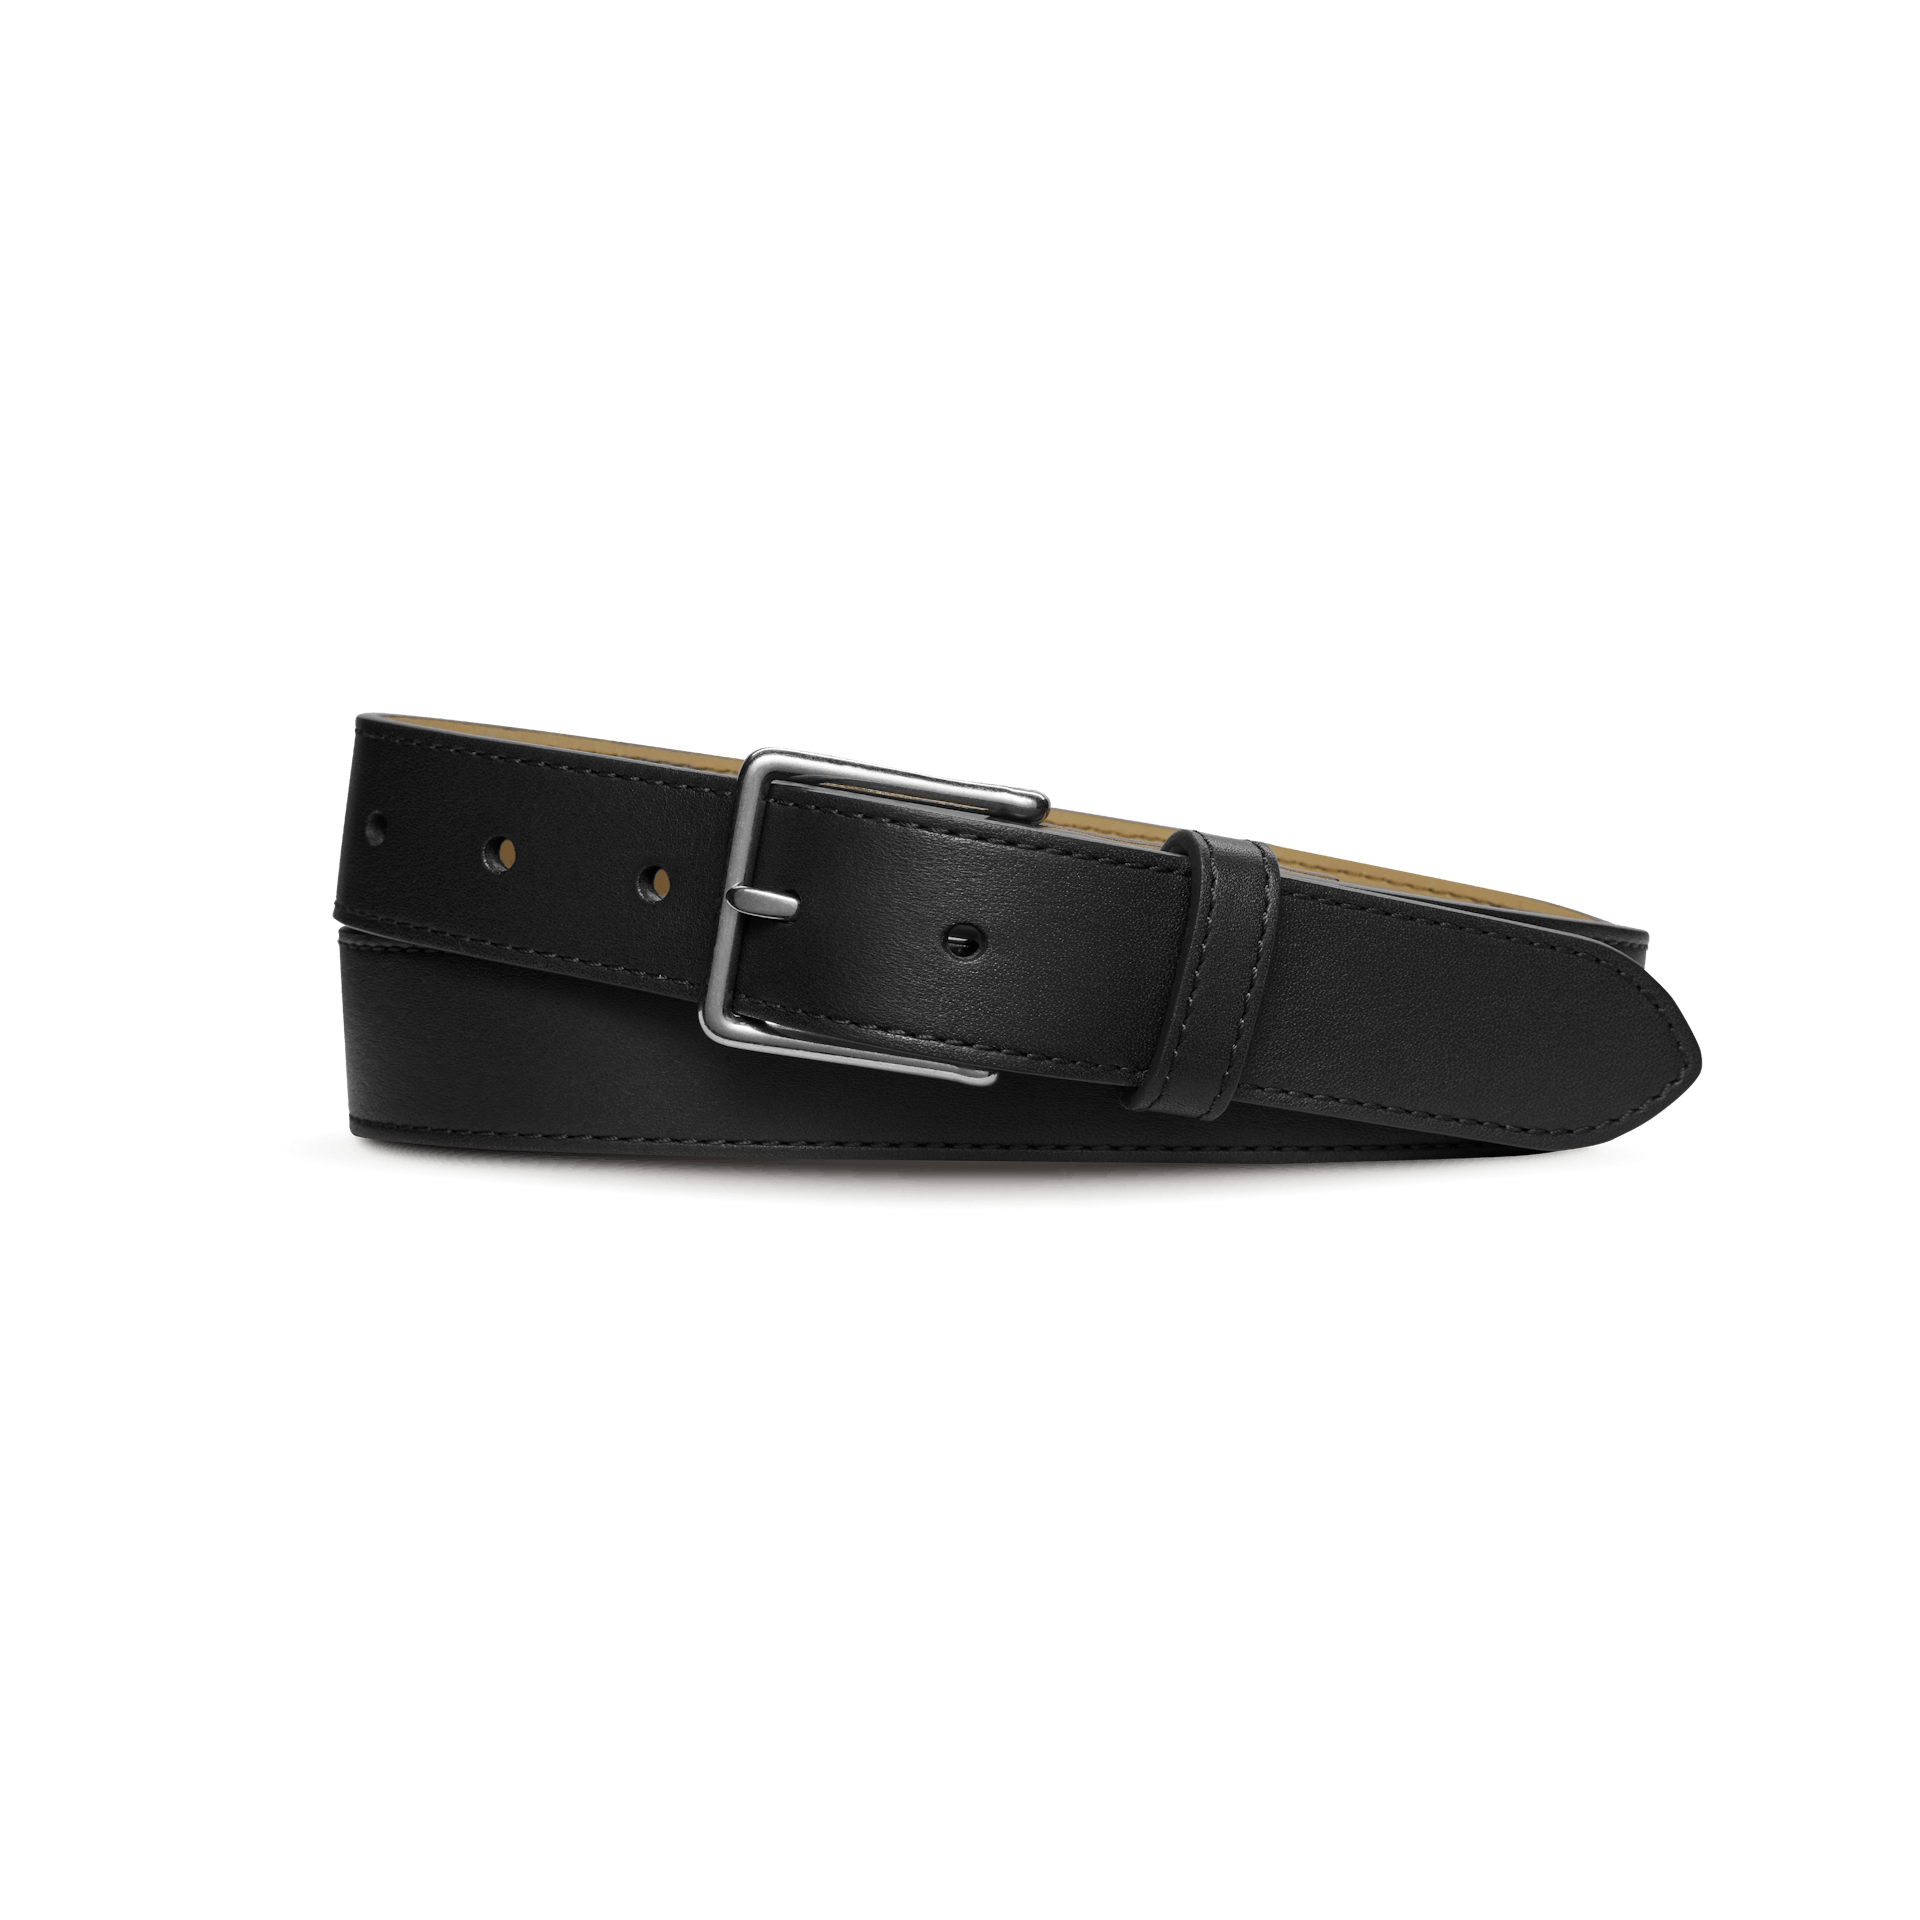 mens black dress belt